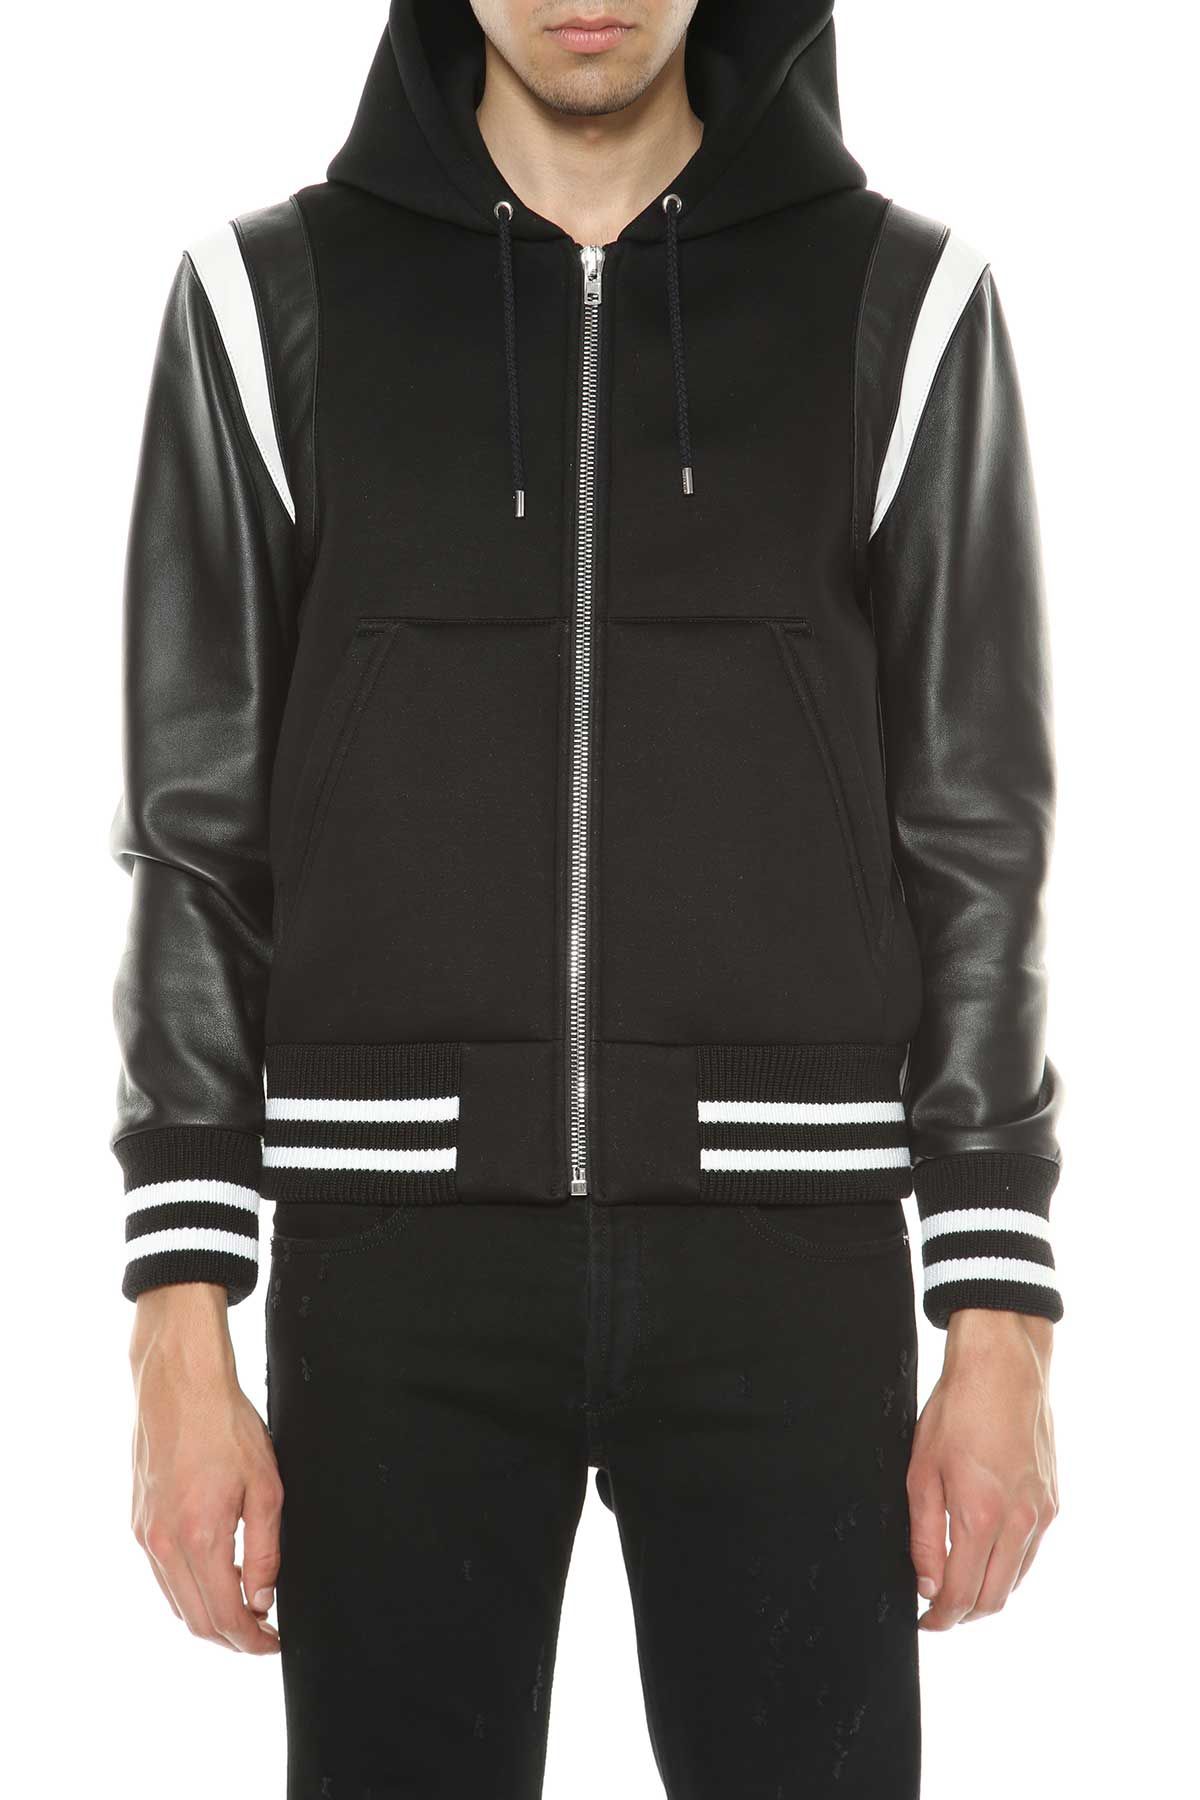 Givenchy - Givenchy Bomber Jacket With Logo - 17F0302443 001, Men's ...